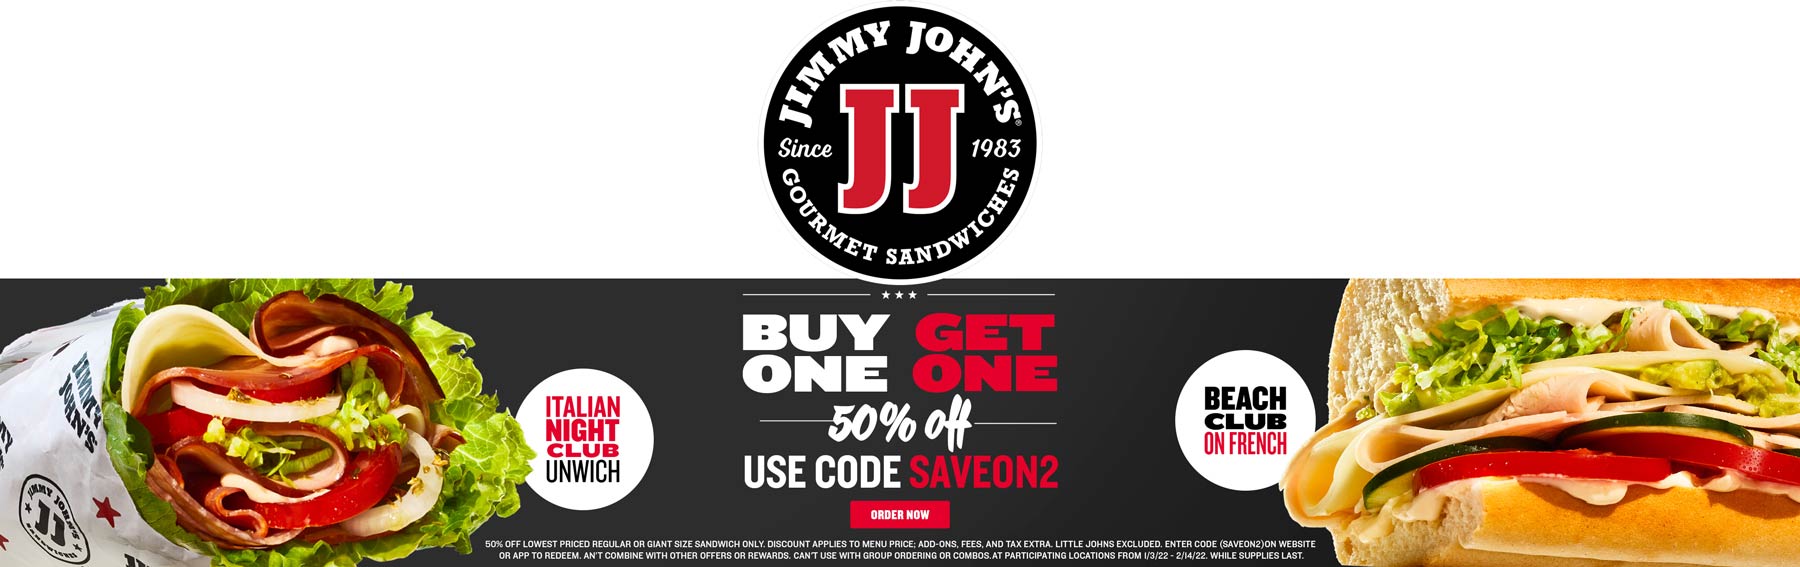 Jimmy Johns restaurants Coupon  Second sandwich 50% off at Jimmy Johns via promo code SAVEON2 #jimmyjohns 